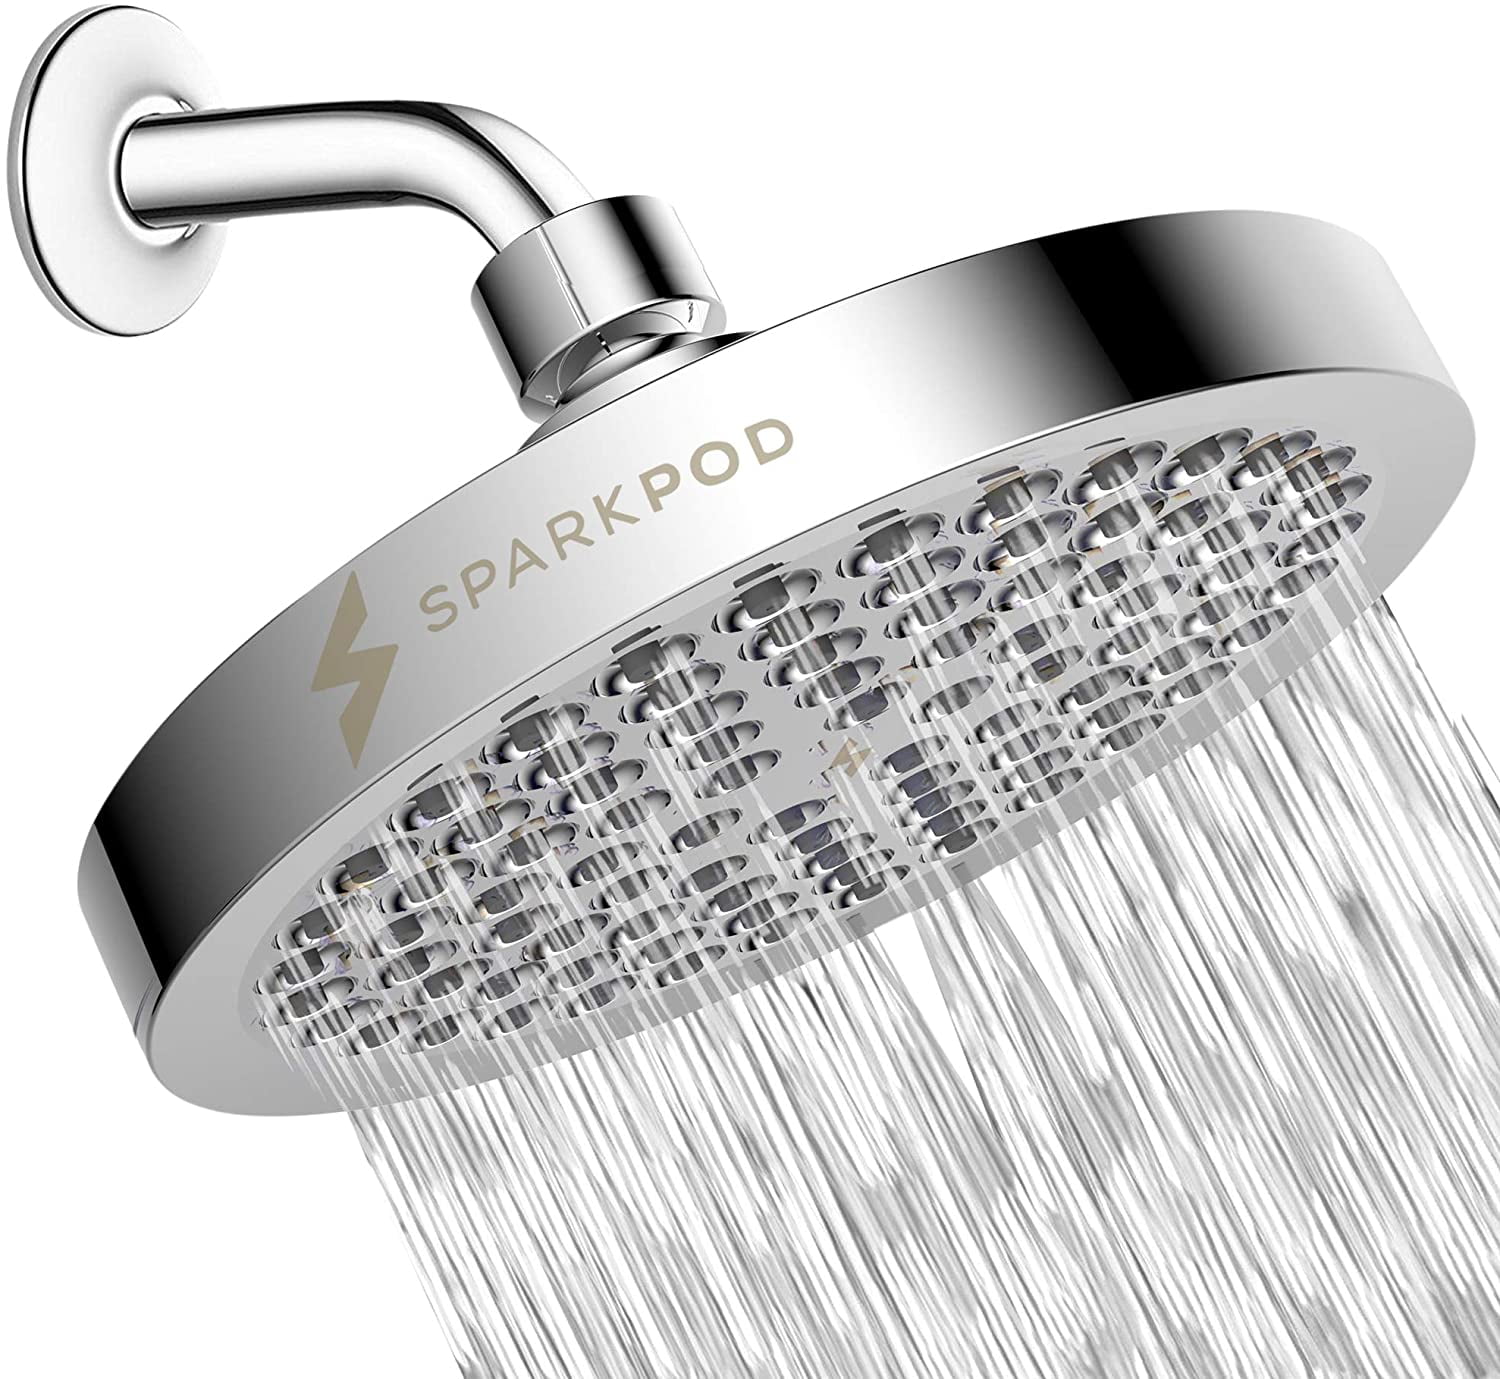 SparkPod High Pressure Shower Head Luxury Modern Chrome Look 